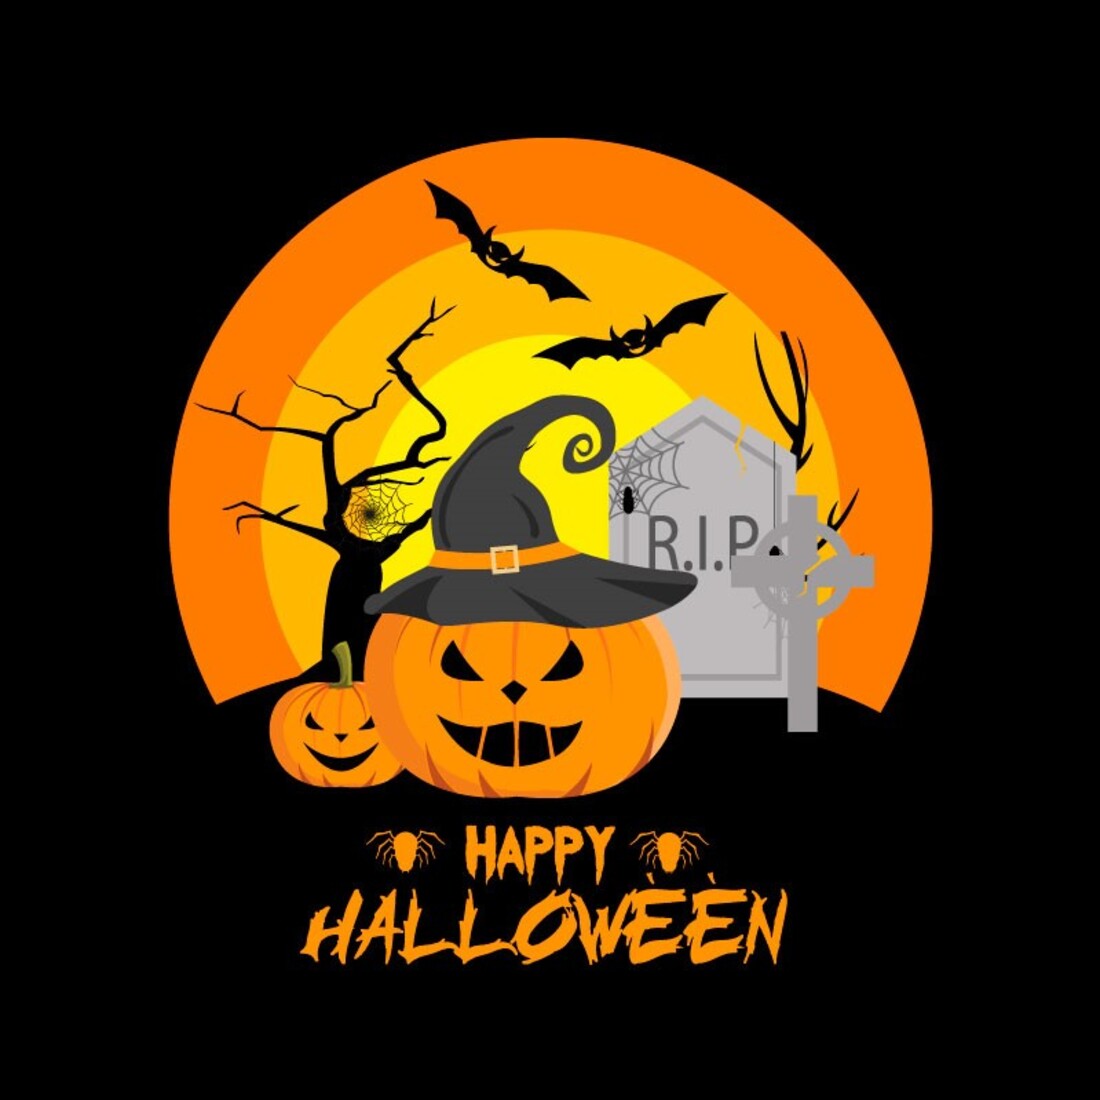 Halloween T-shirt Design with Pumpkin preview image.